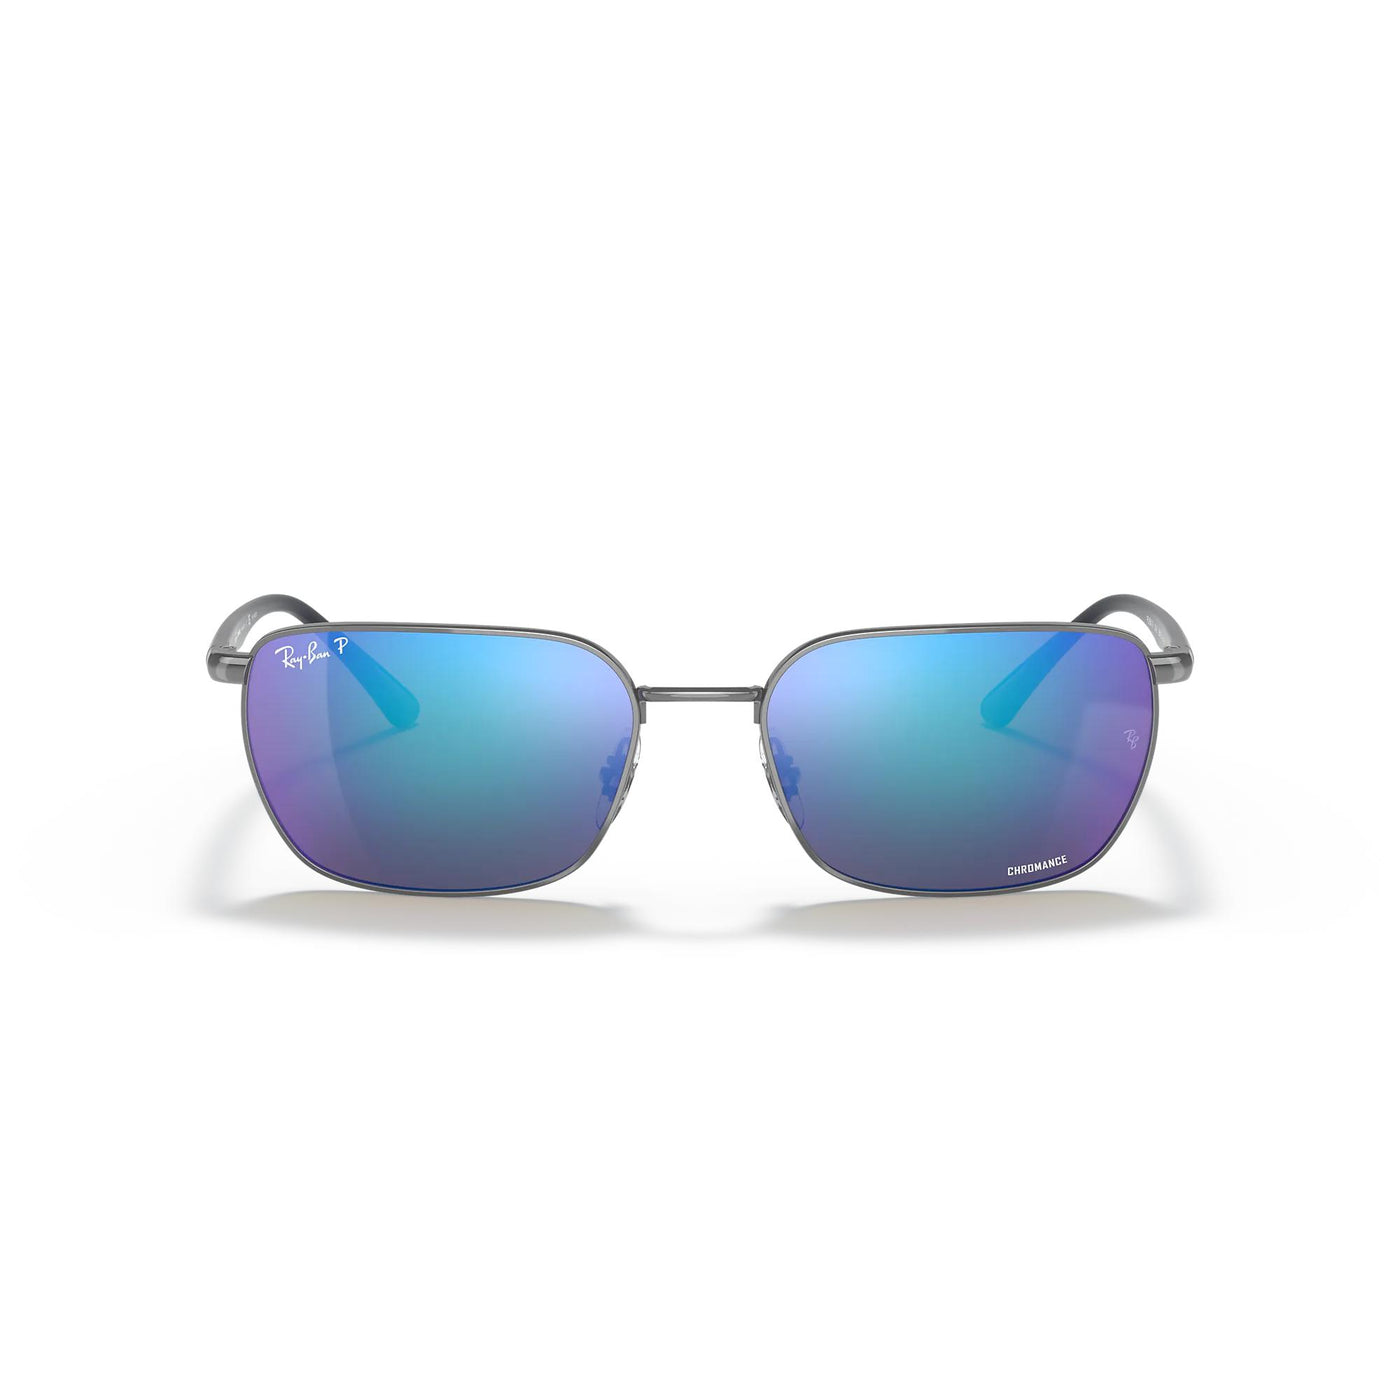 Ray Ban Chromance Sunglasses-Sunglasses-Gunmetal-Polarized Grey/Blue Mirror-Kevin's Fine Outdoor Gear & Apparel